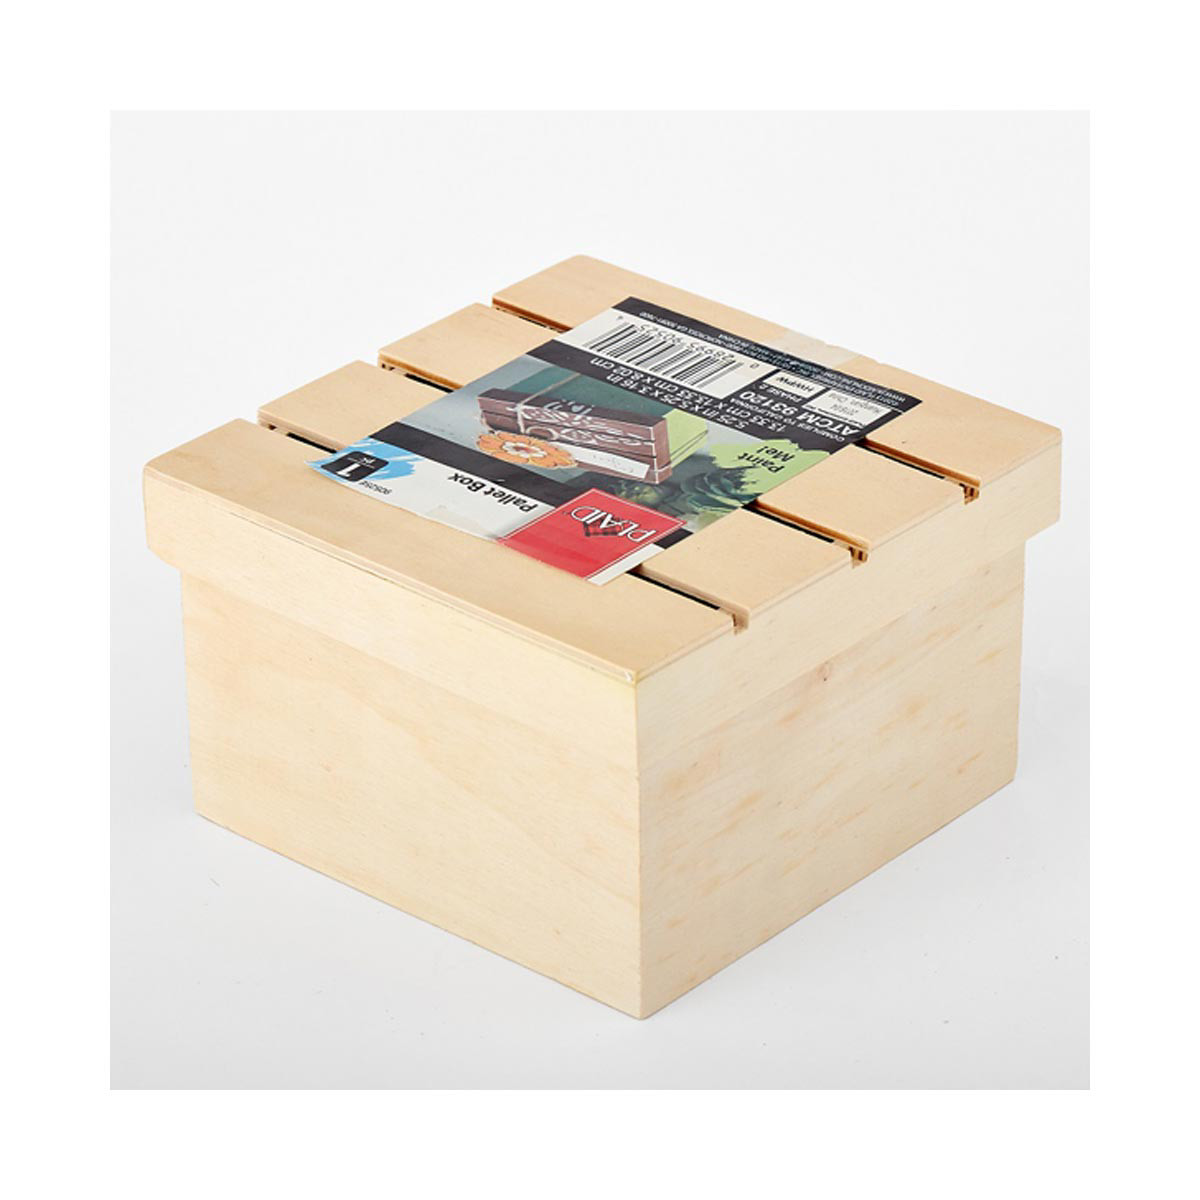 Plaid Unpainted Wood Pallet Box, 5.25" x 5.25" x 3"